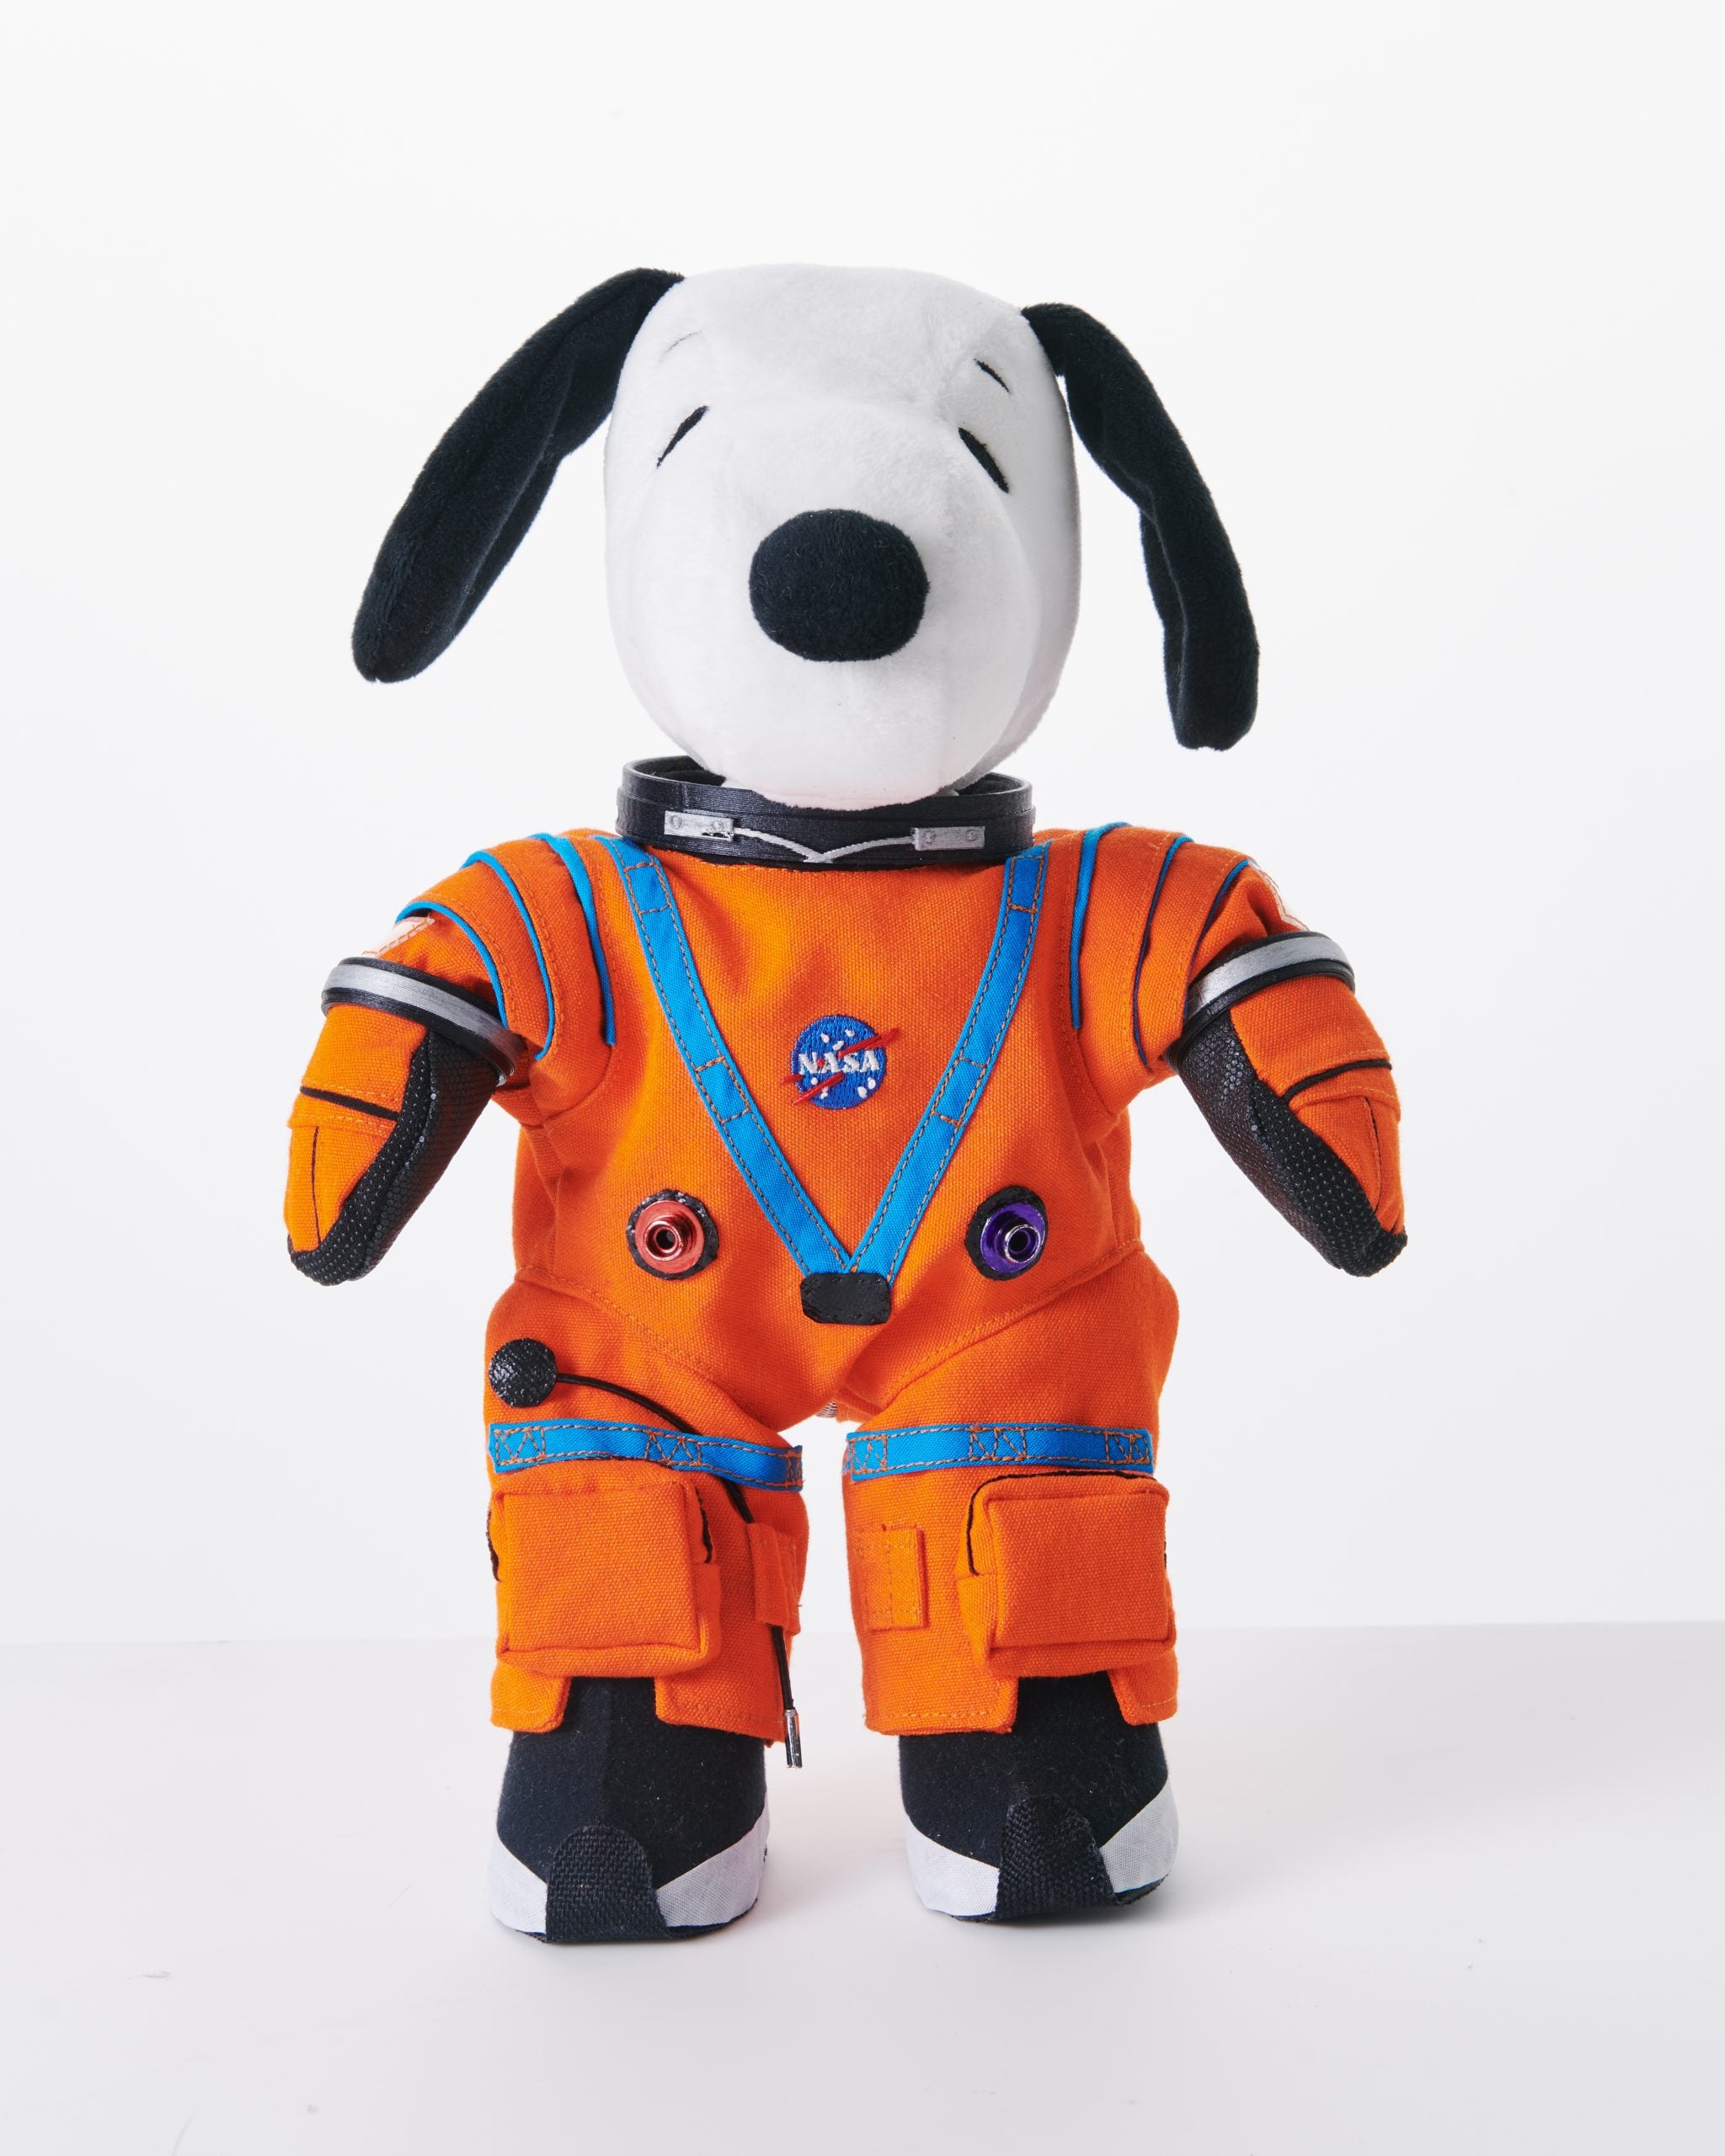 Snoopy as a zero gravity indicator